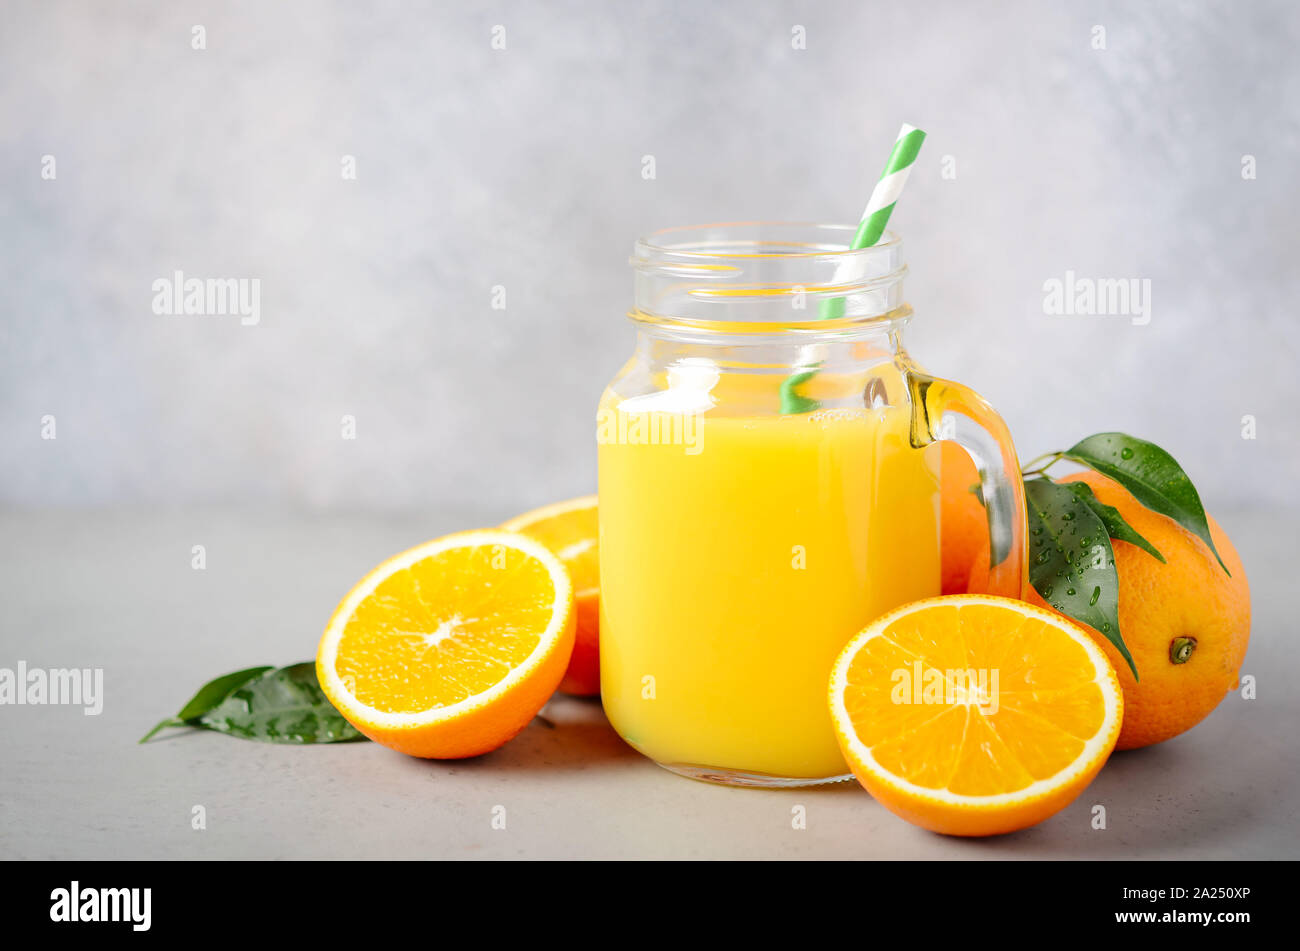 https://c8.alamy.com/comp/2A250XP/fresh-orange-juice-in-a-jar-on-gray-concrete-background-2A250XP.jpg